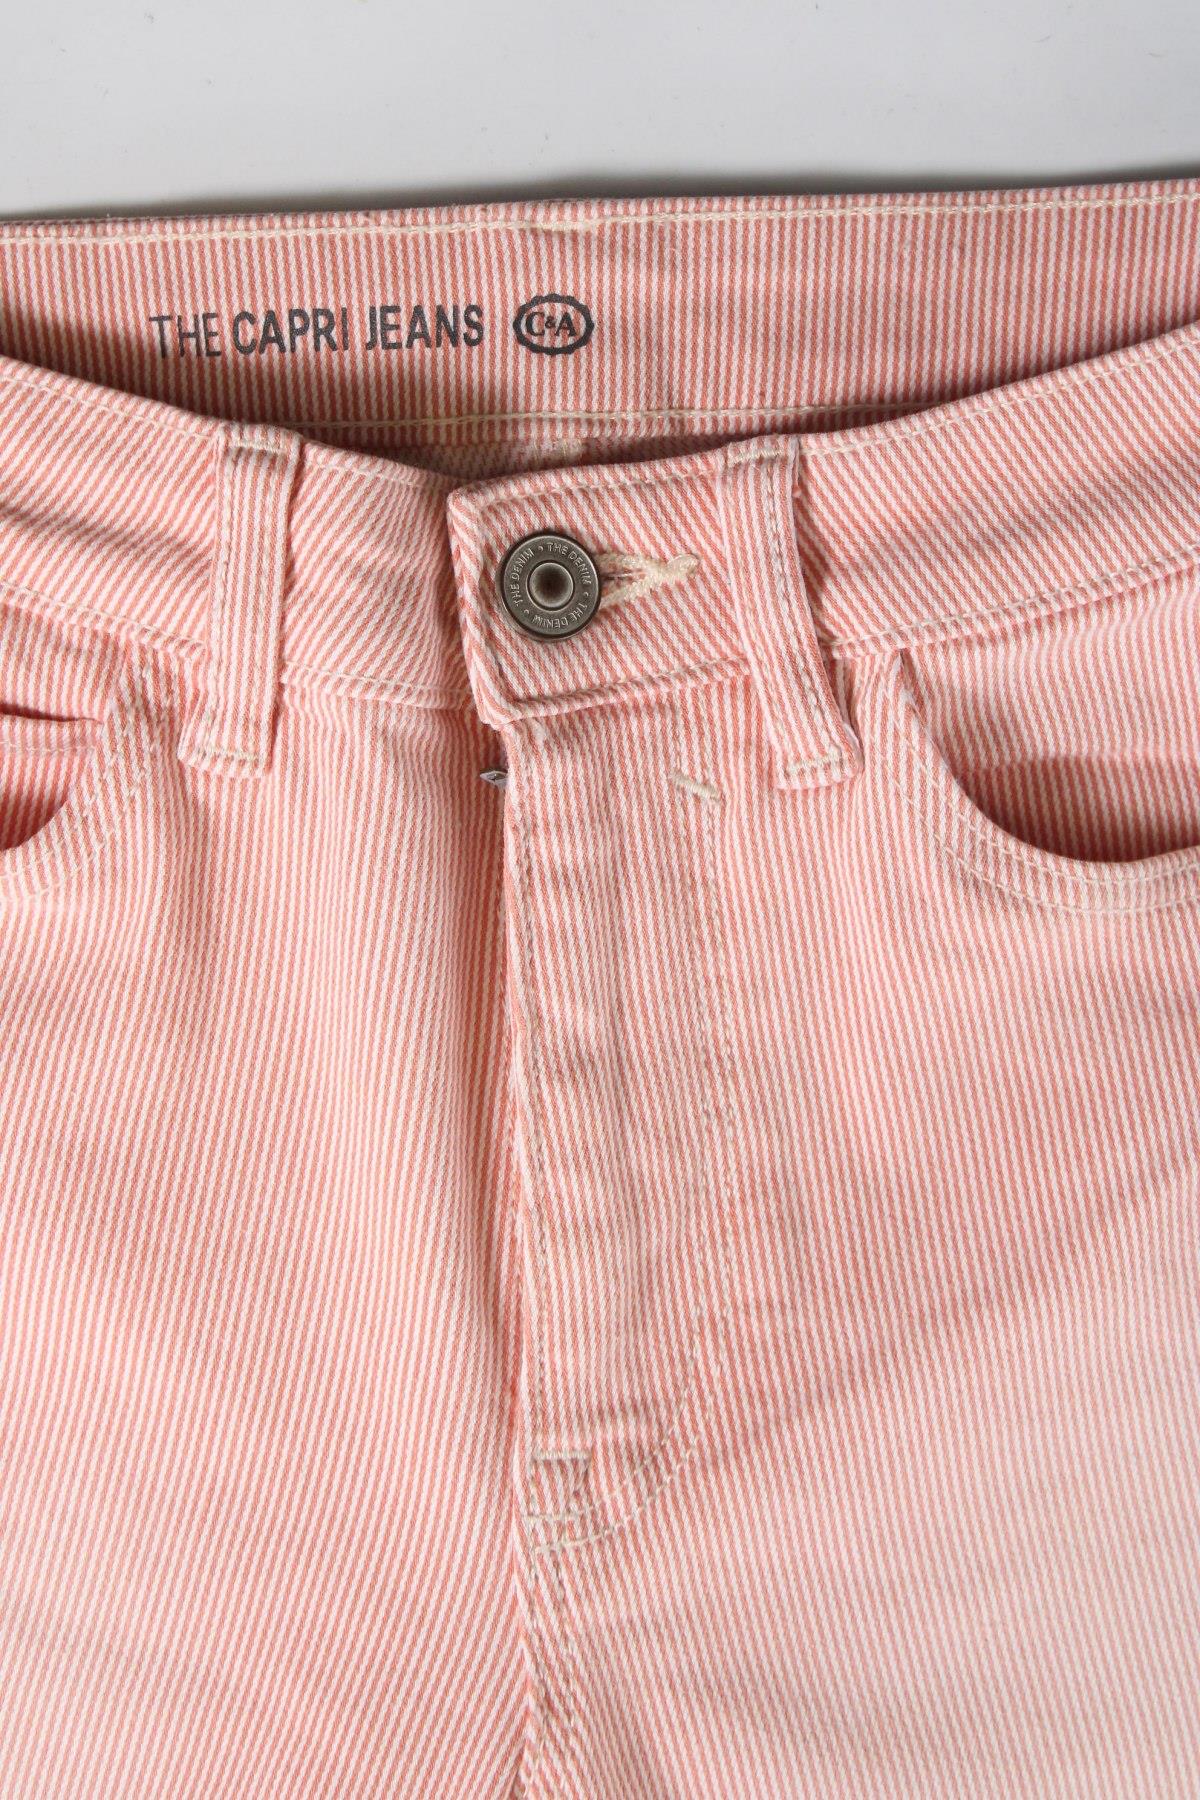 C&A Women's Capri Jeans Cotton Pink & White Stripe Stretch Denim Trousers New